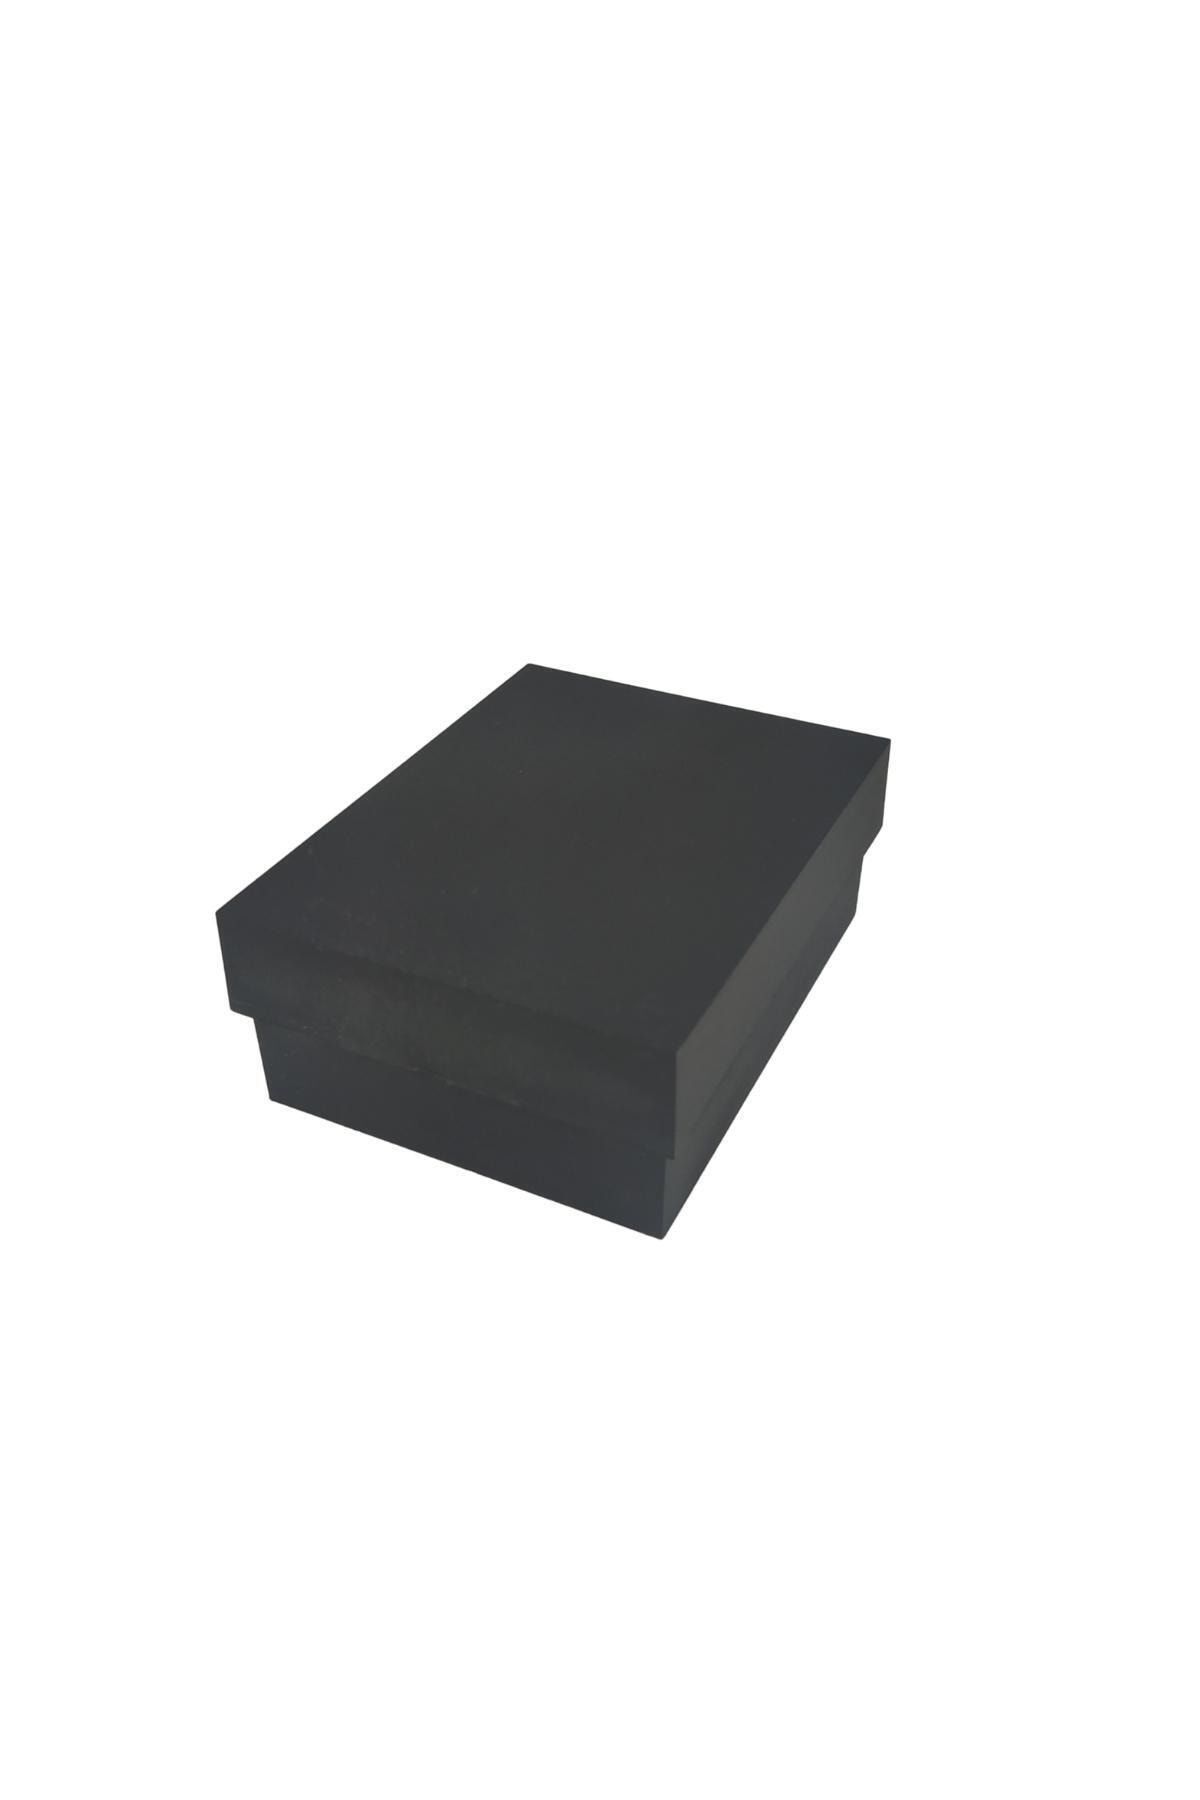 ÖZER KUTU Siyah Plastik (mika) Kolye & Mini Set Kutusu (içi Süngerli) 24 Lü Paket